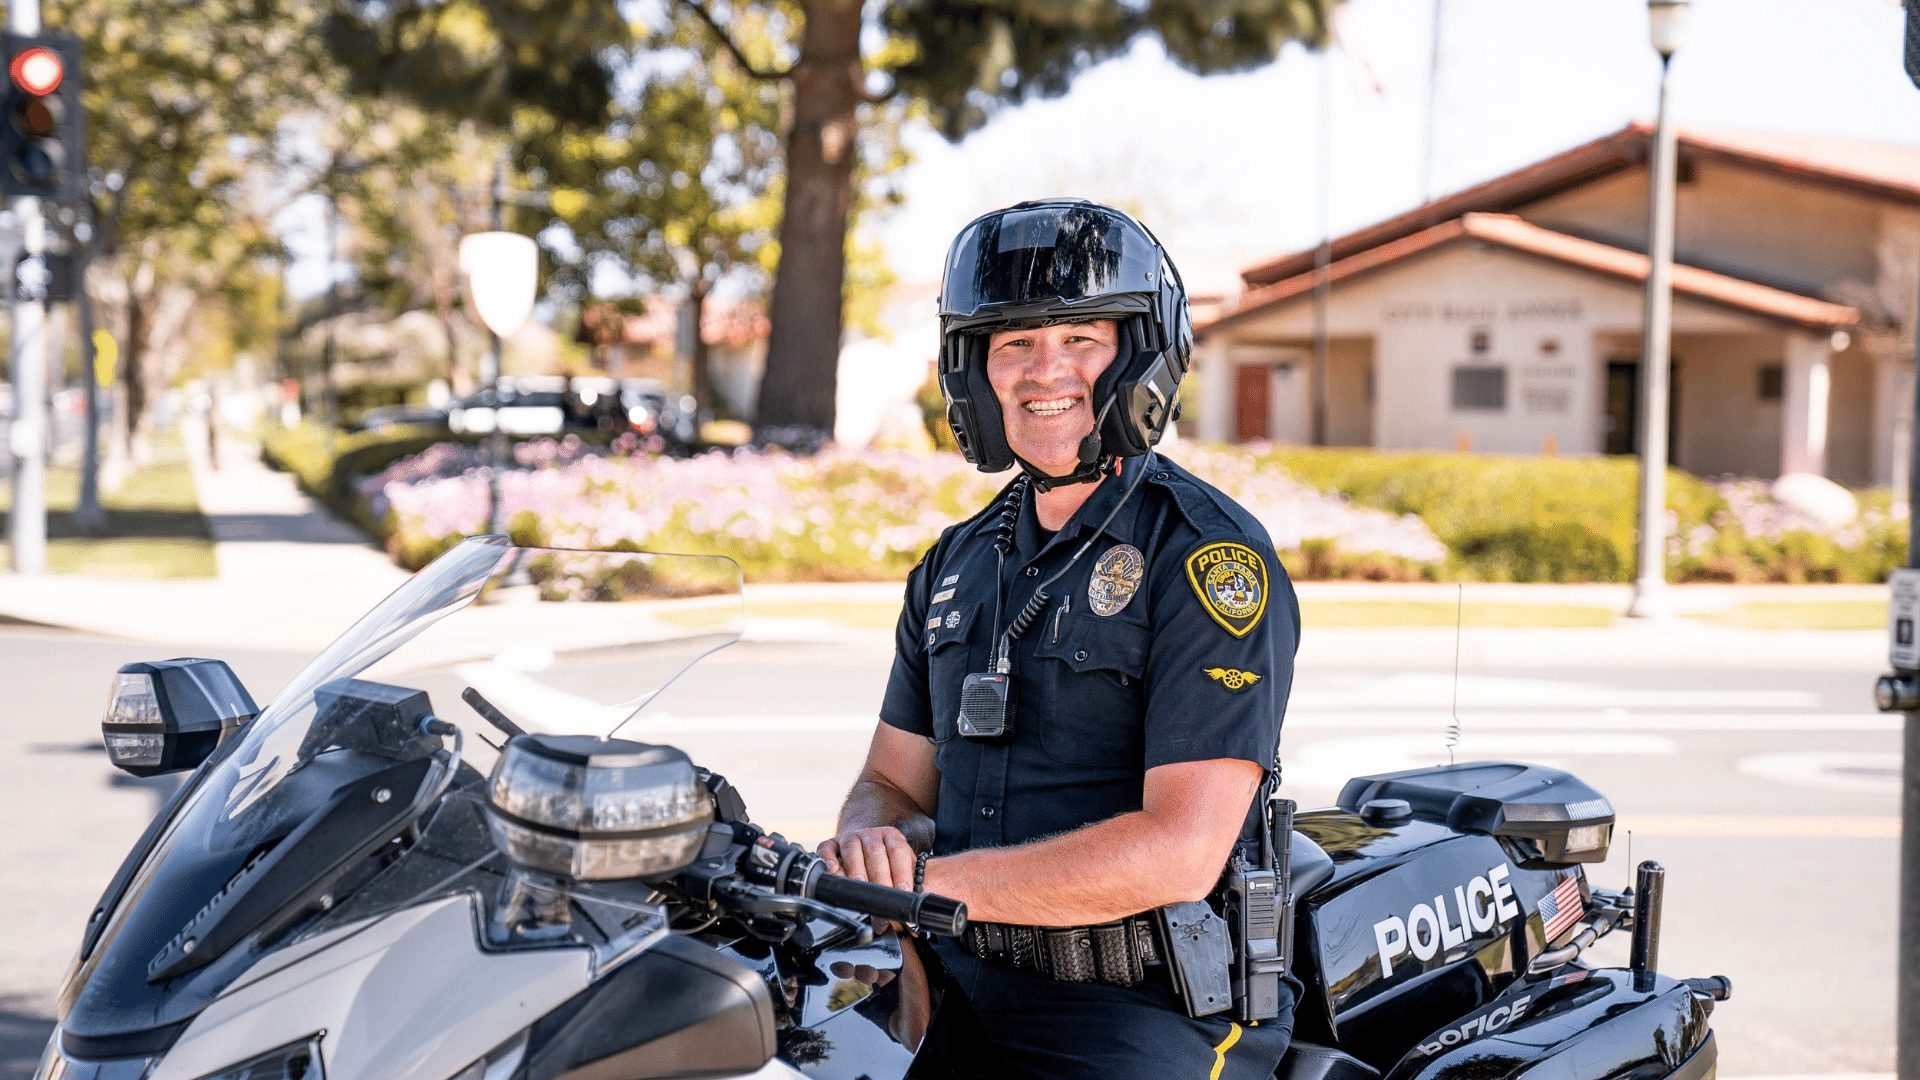 Santa Maria Police Officer Andy Brice sits on his patrol motorcycle